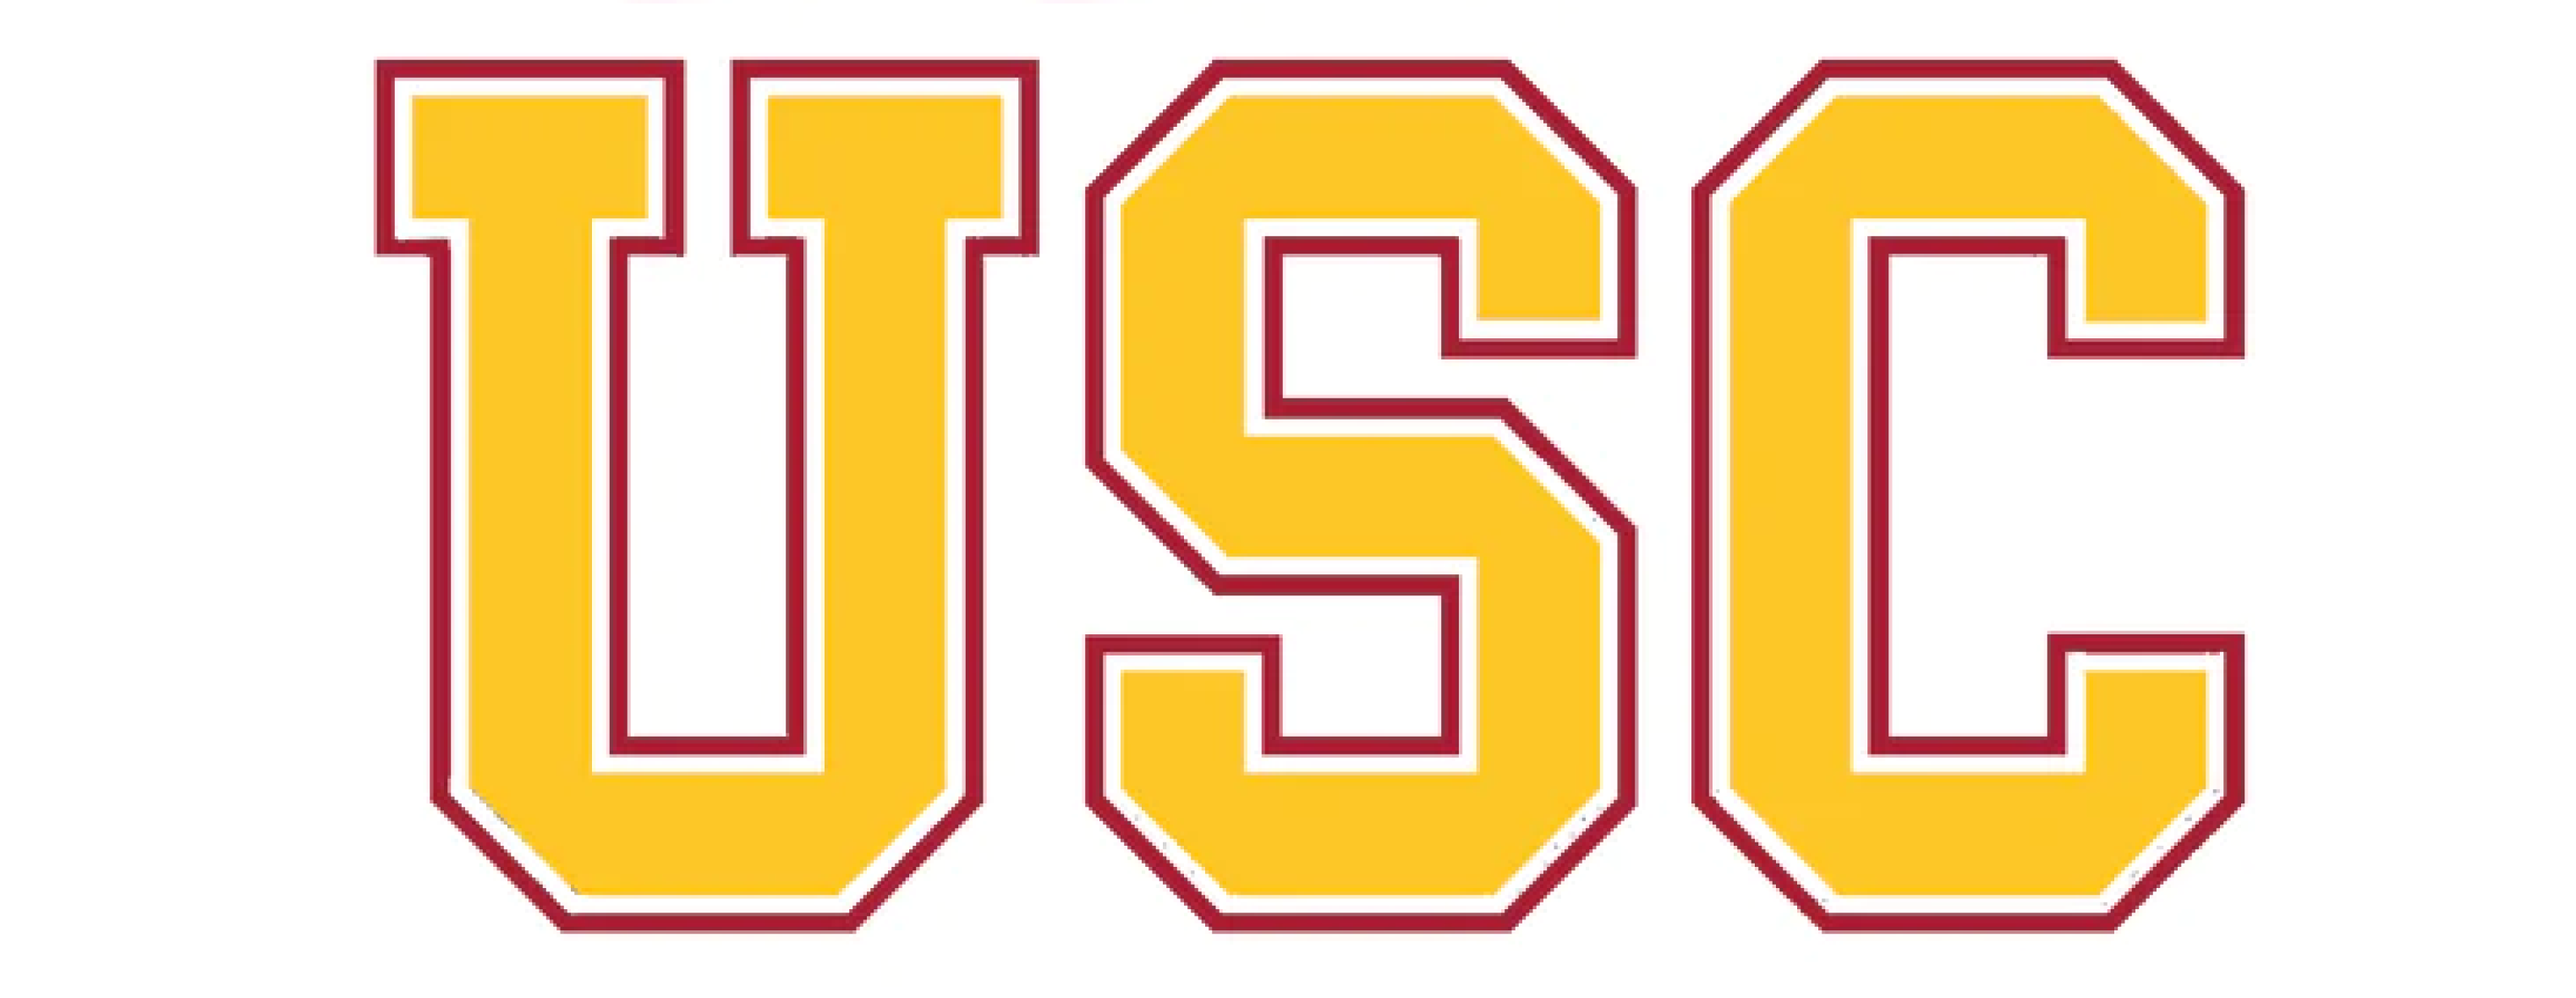 USC University of Southern California logo.